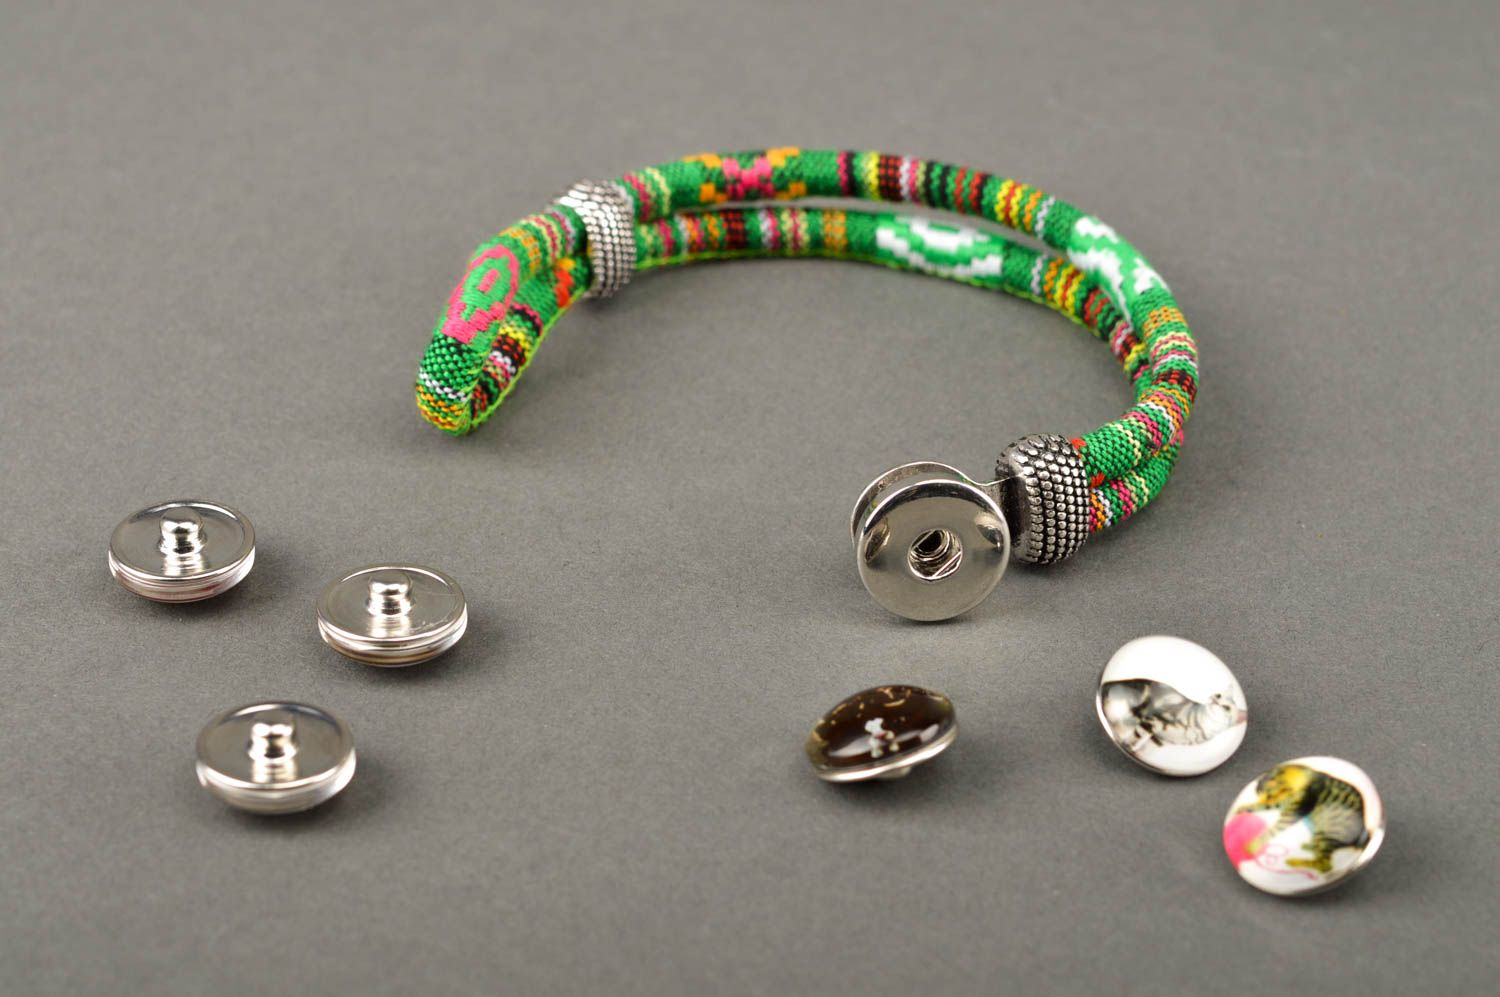 Handmade jewelry designer bracelet wrist bracelet gifts for girls cool jewelry photo 5